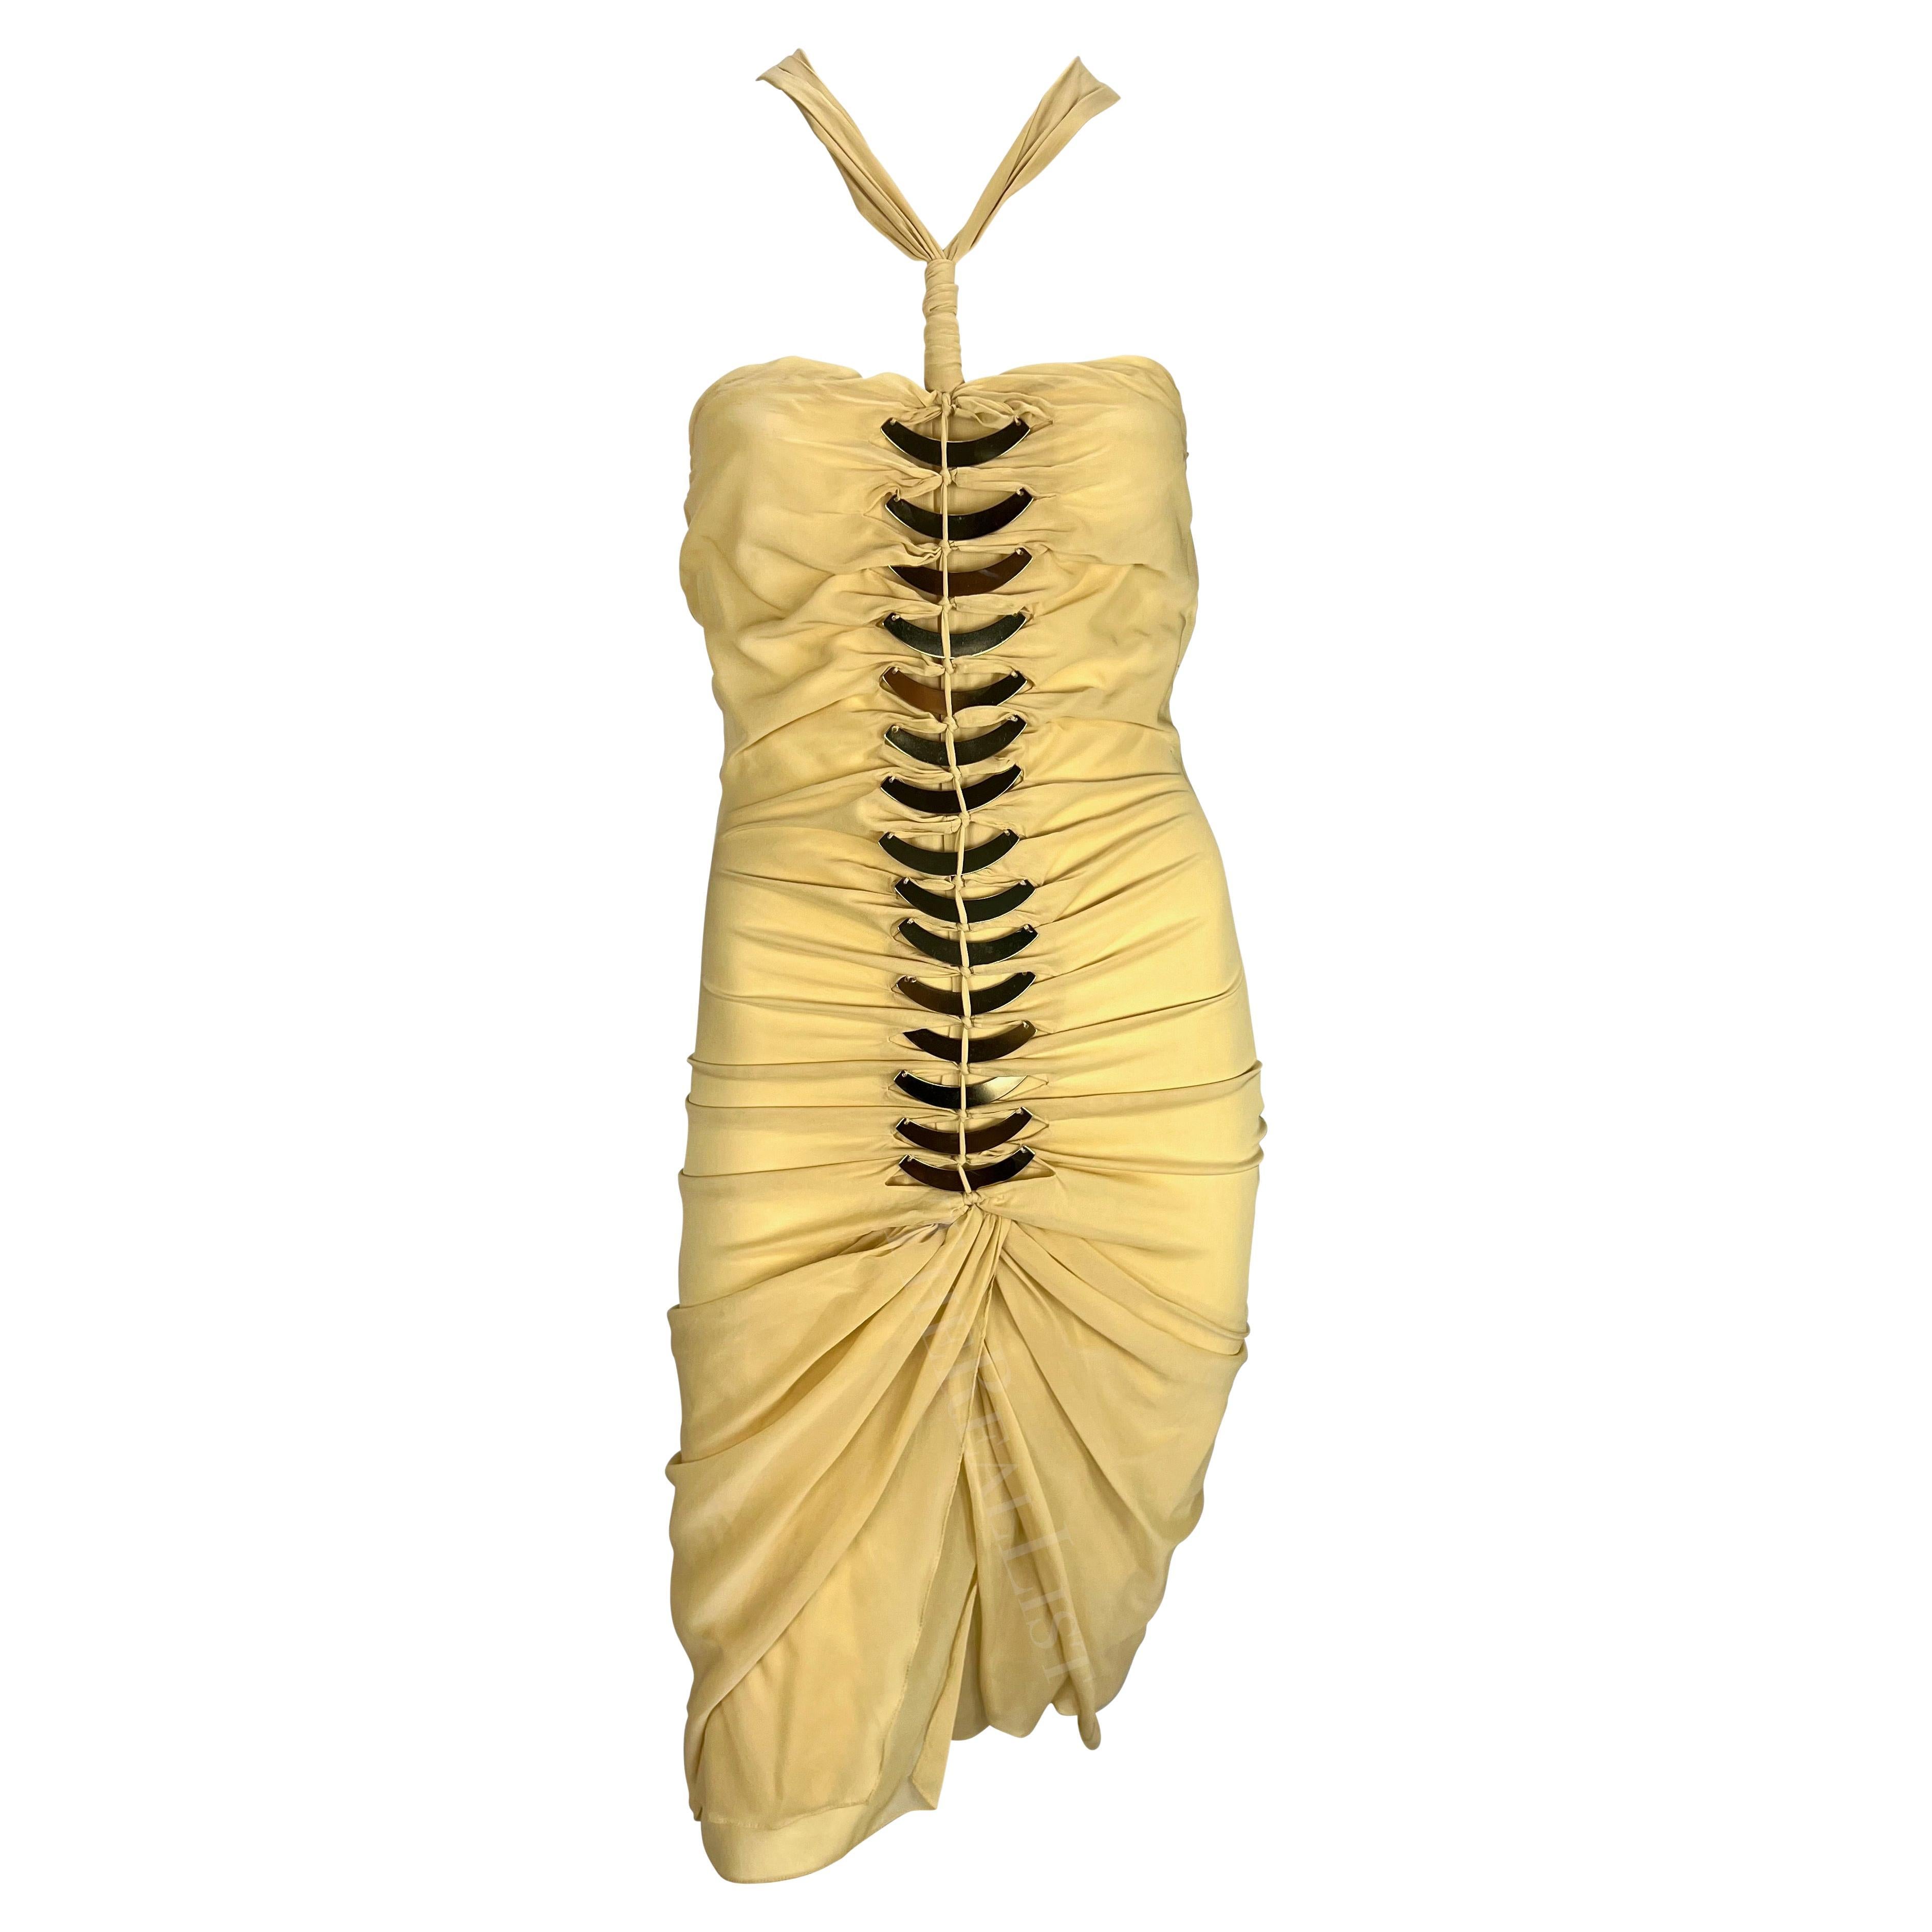 S/S 2005 Gucci Beige Cutout Gold-Tone Metal Spine Bodycon Mini Dress For Sale